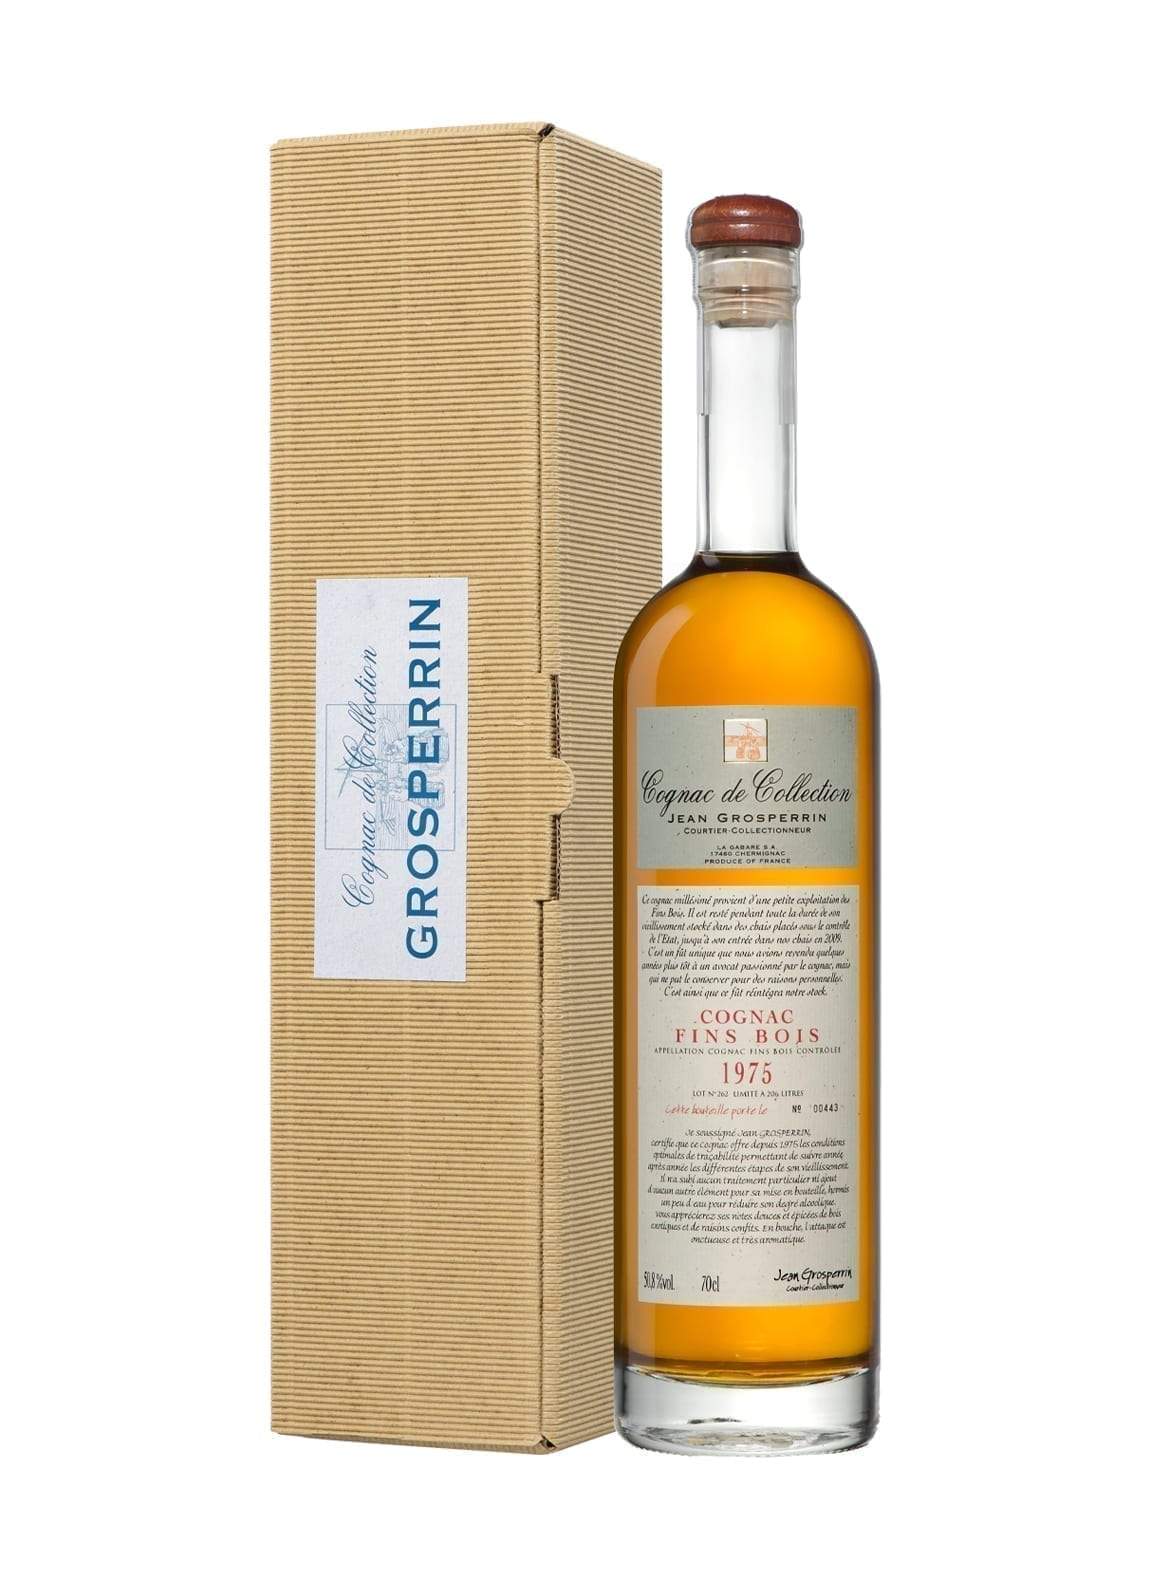 Grosperrin 'Cognac De Collection' 1975 Fins Bois 50.1 % 700ml | Brandy | Shop online at Spirits of France